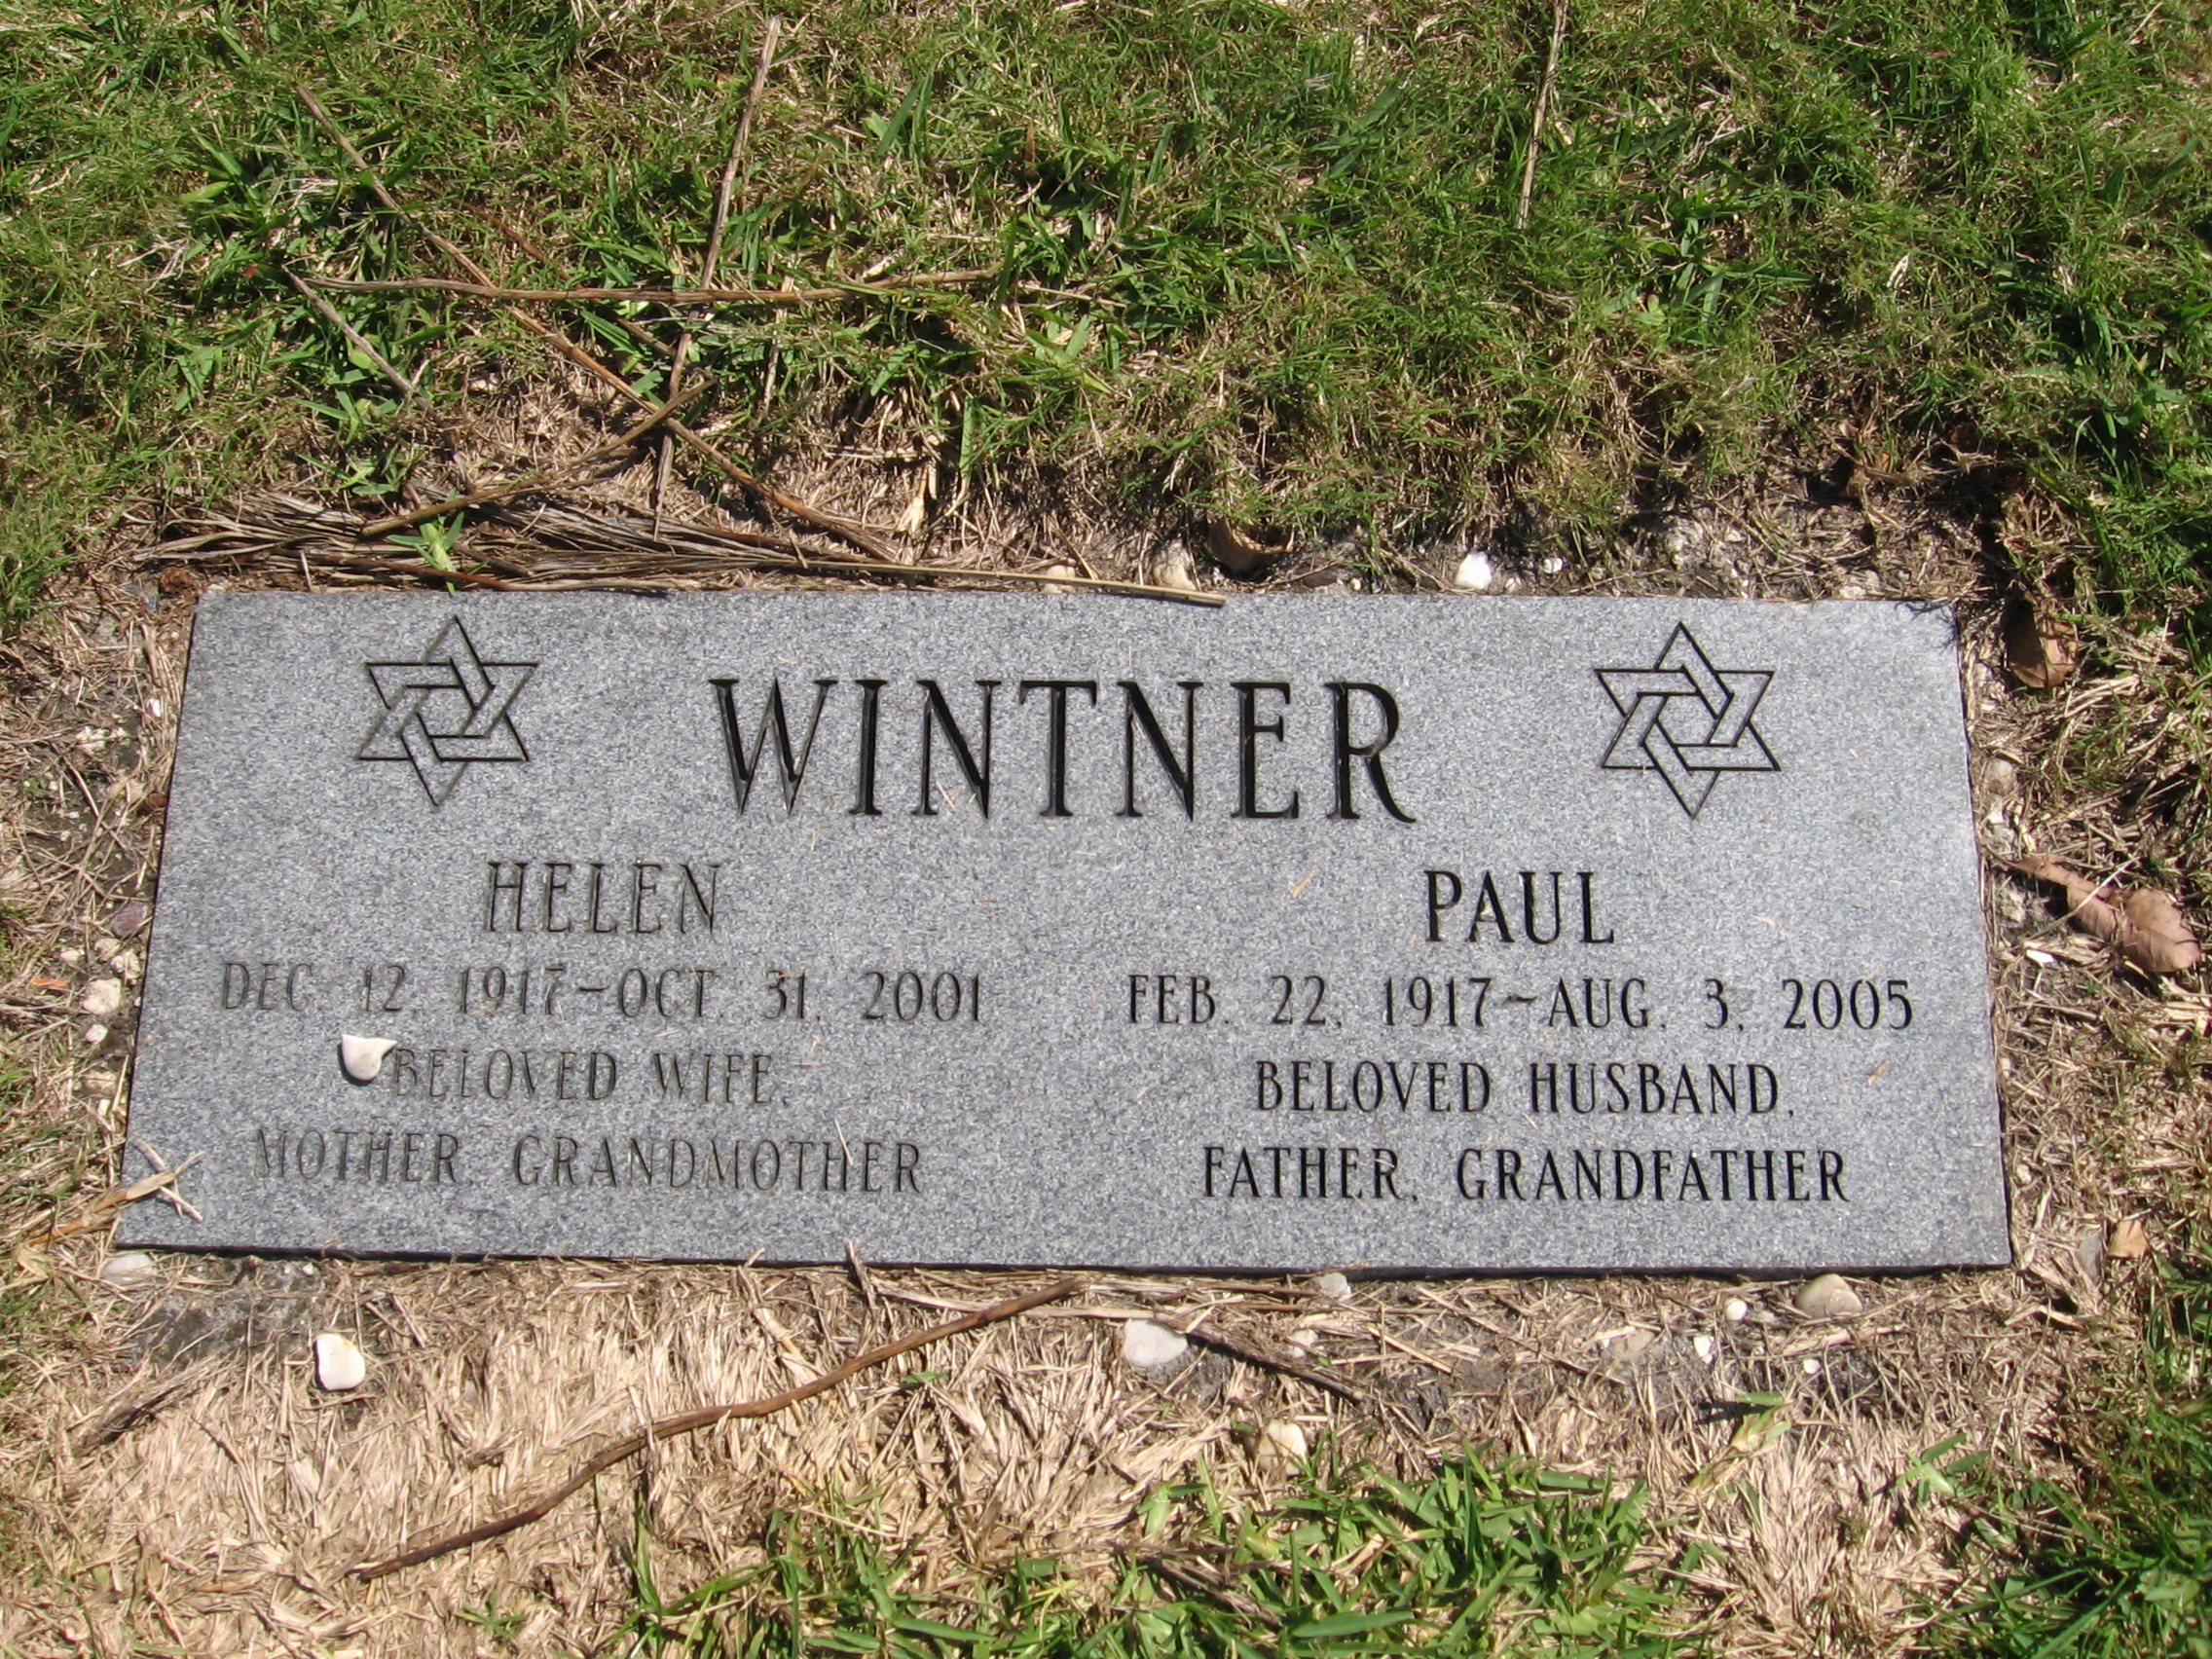 Paul Wintner